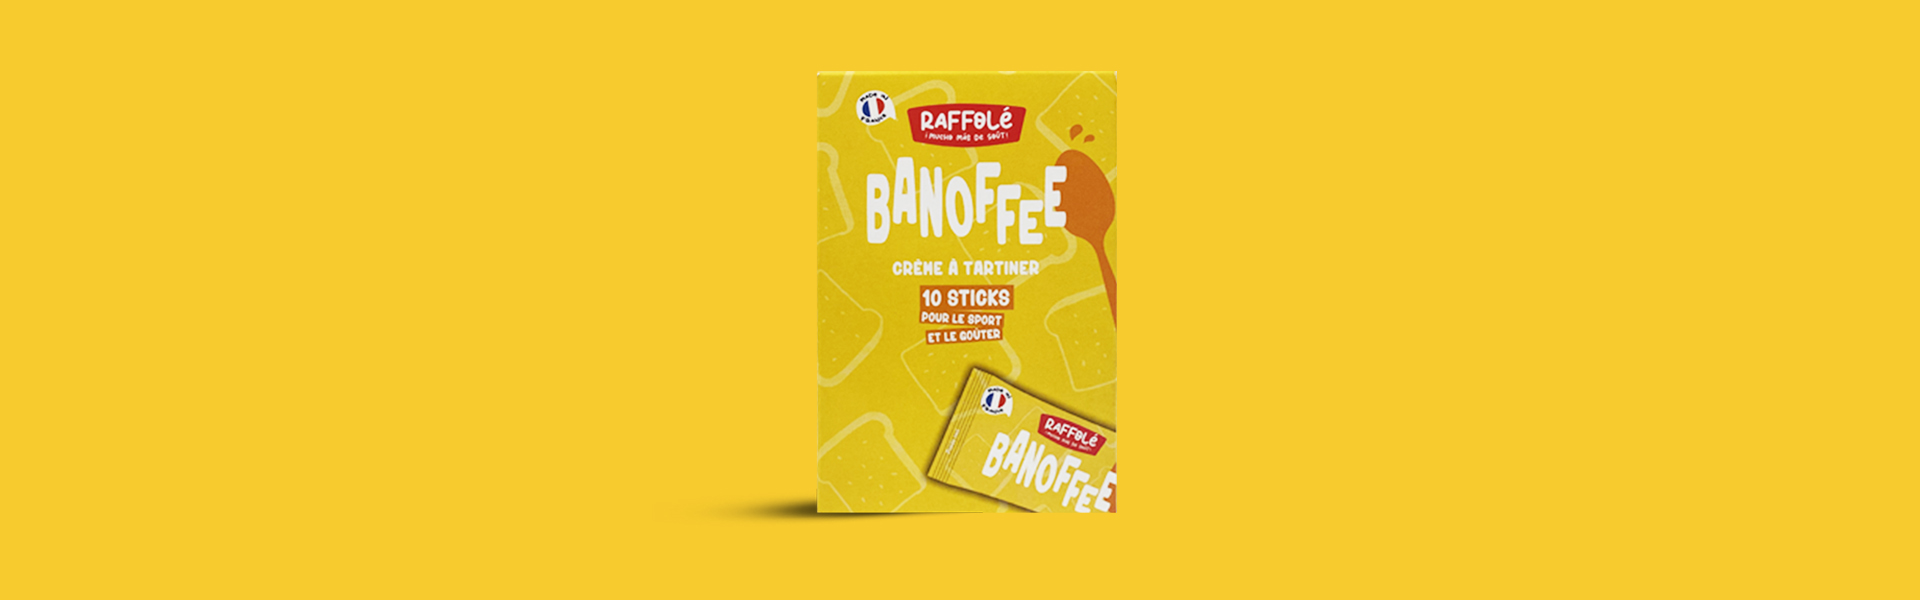 Raffolé-slide-stick-banoffee